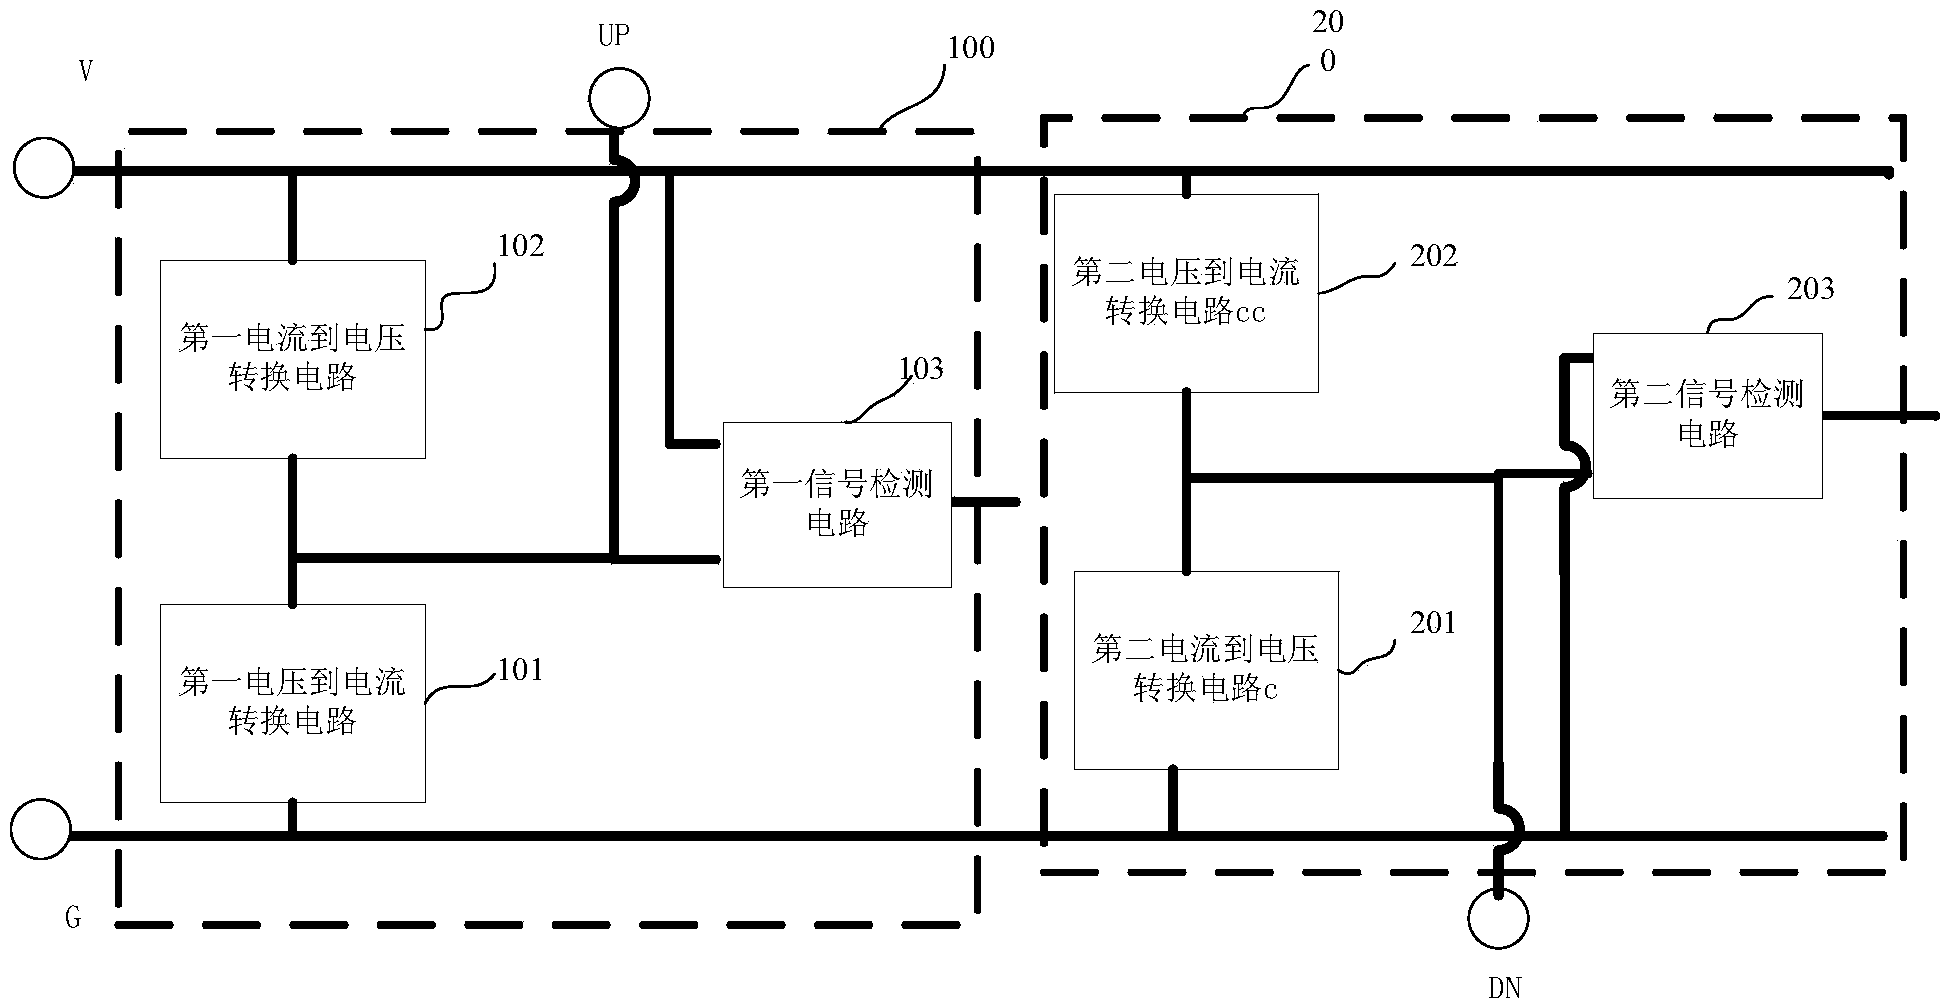 Two-way transmission interface conversion circuit